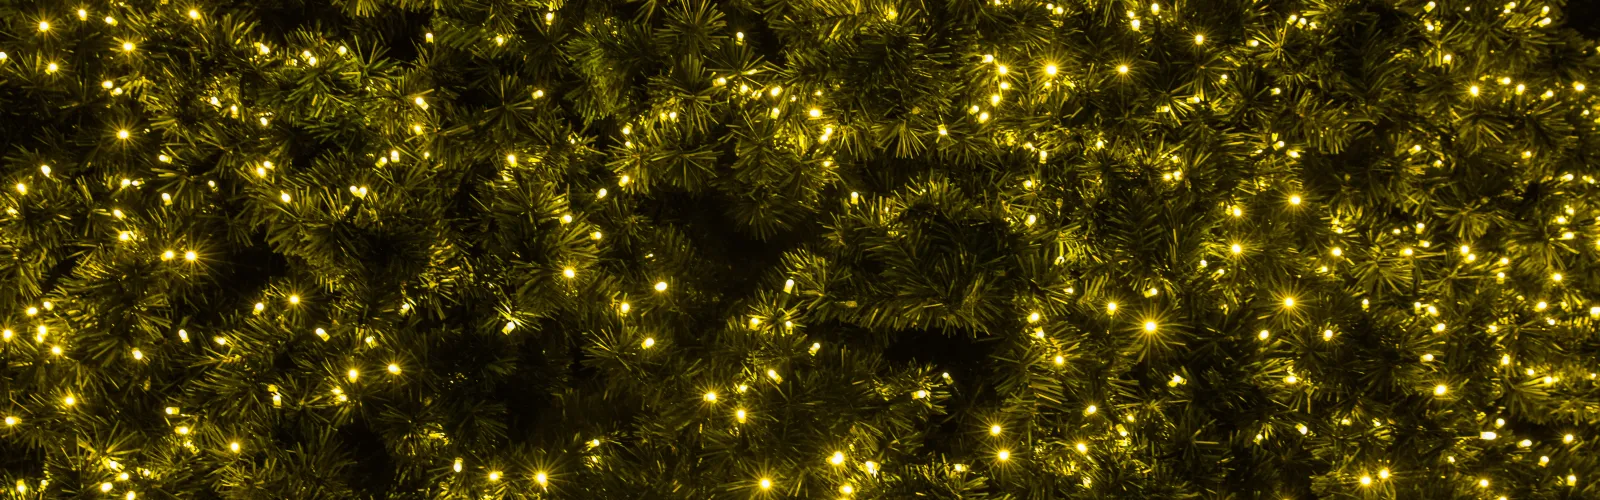 christmas lights on tree